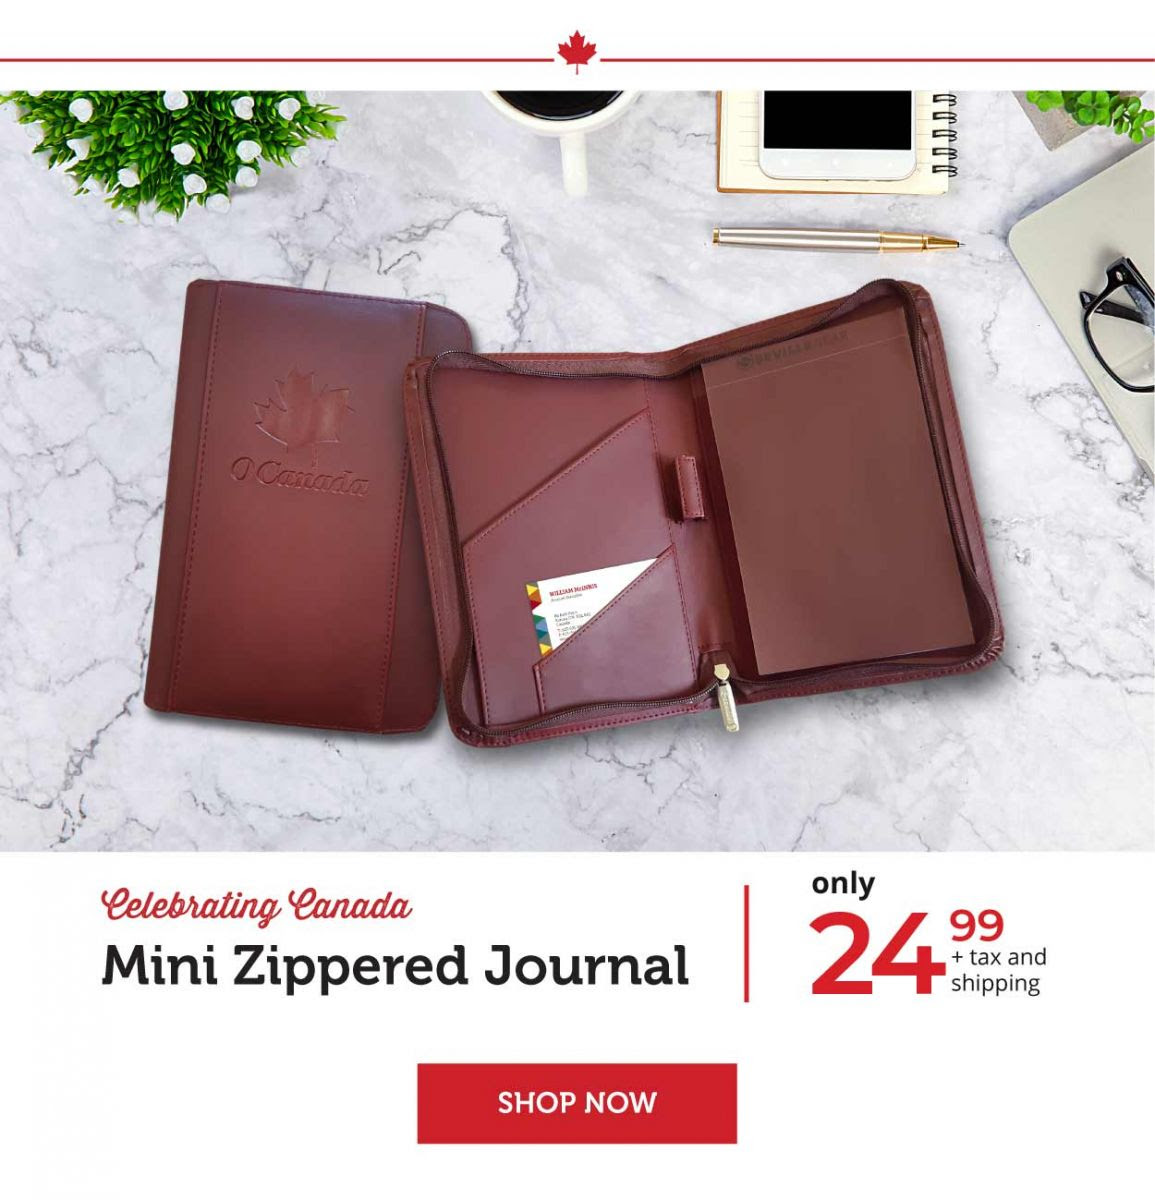 Mini Zippered Journal